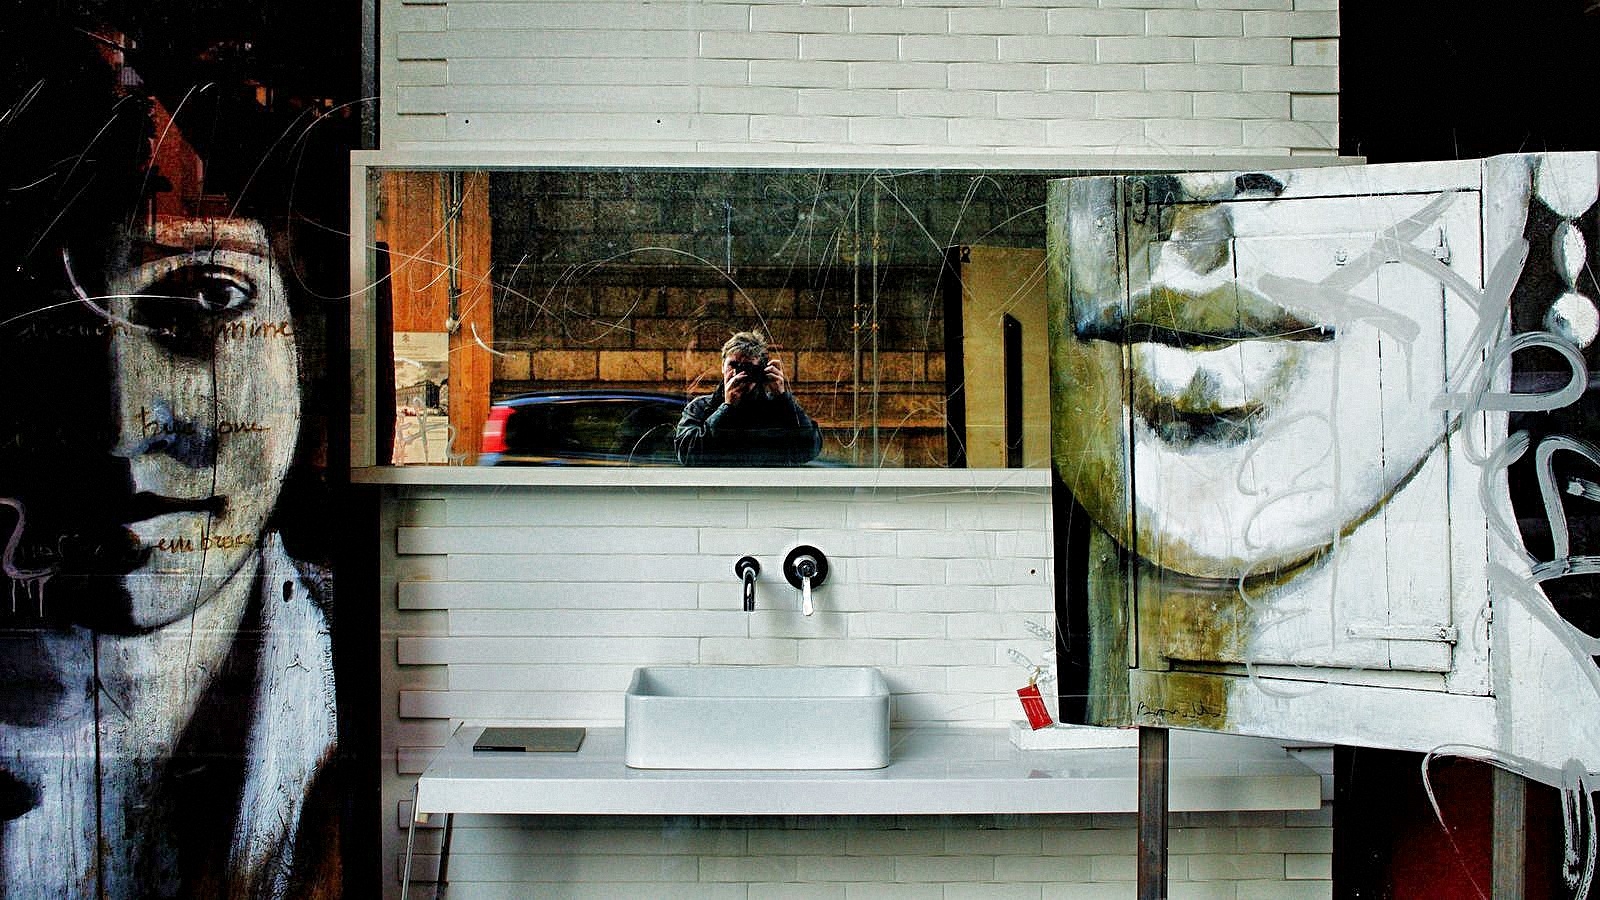 https://www.pexels.com/photo/white-ceramic-rectangular-sink-under-white-wooden-frame-rectangular-mirror-157231/